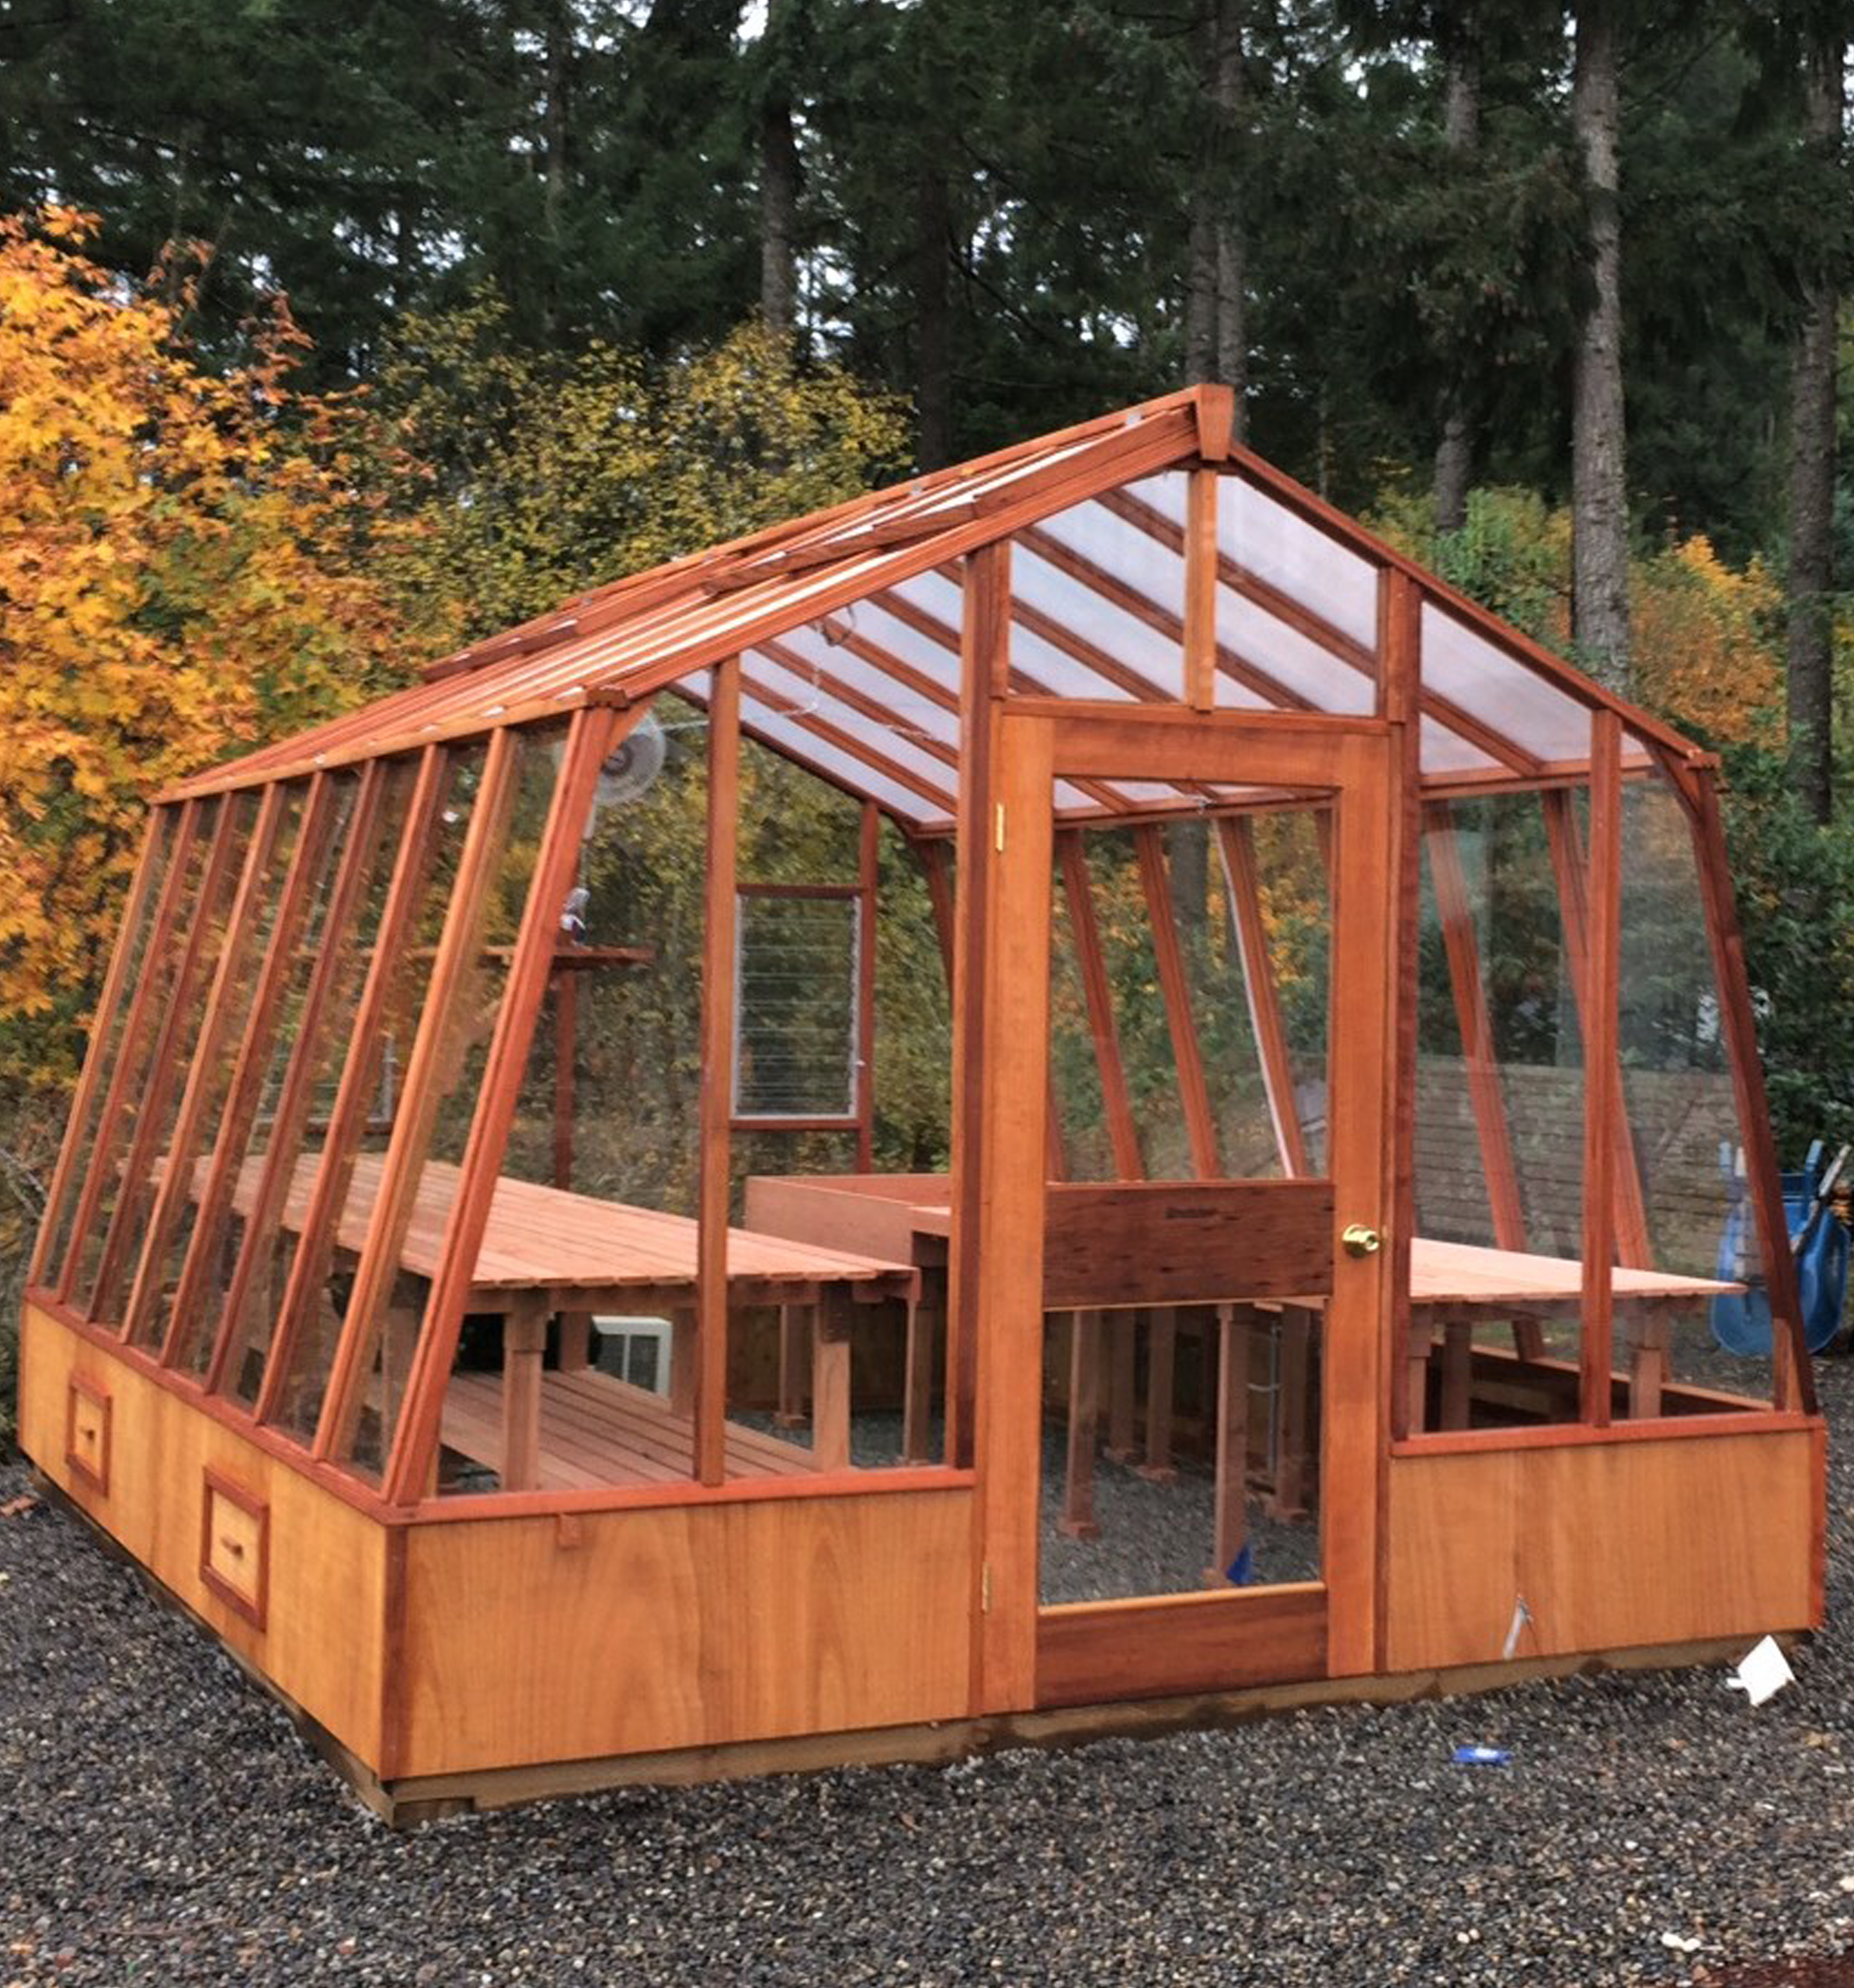 redwood and glass greenhouse kits